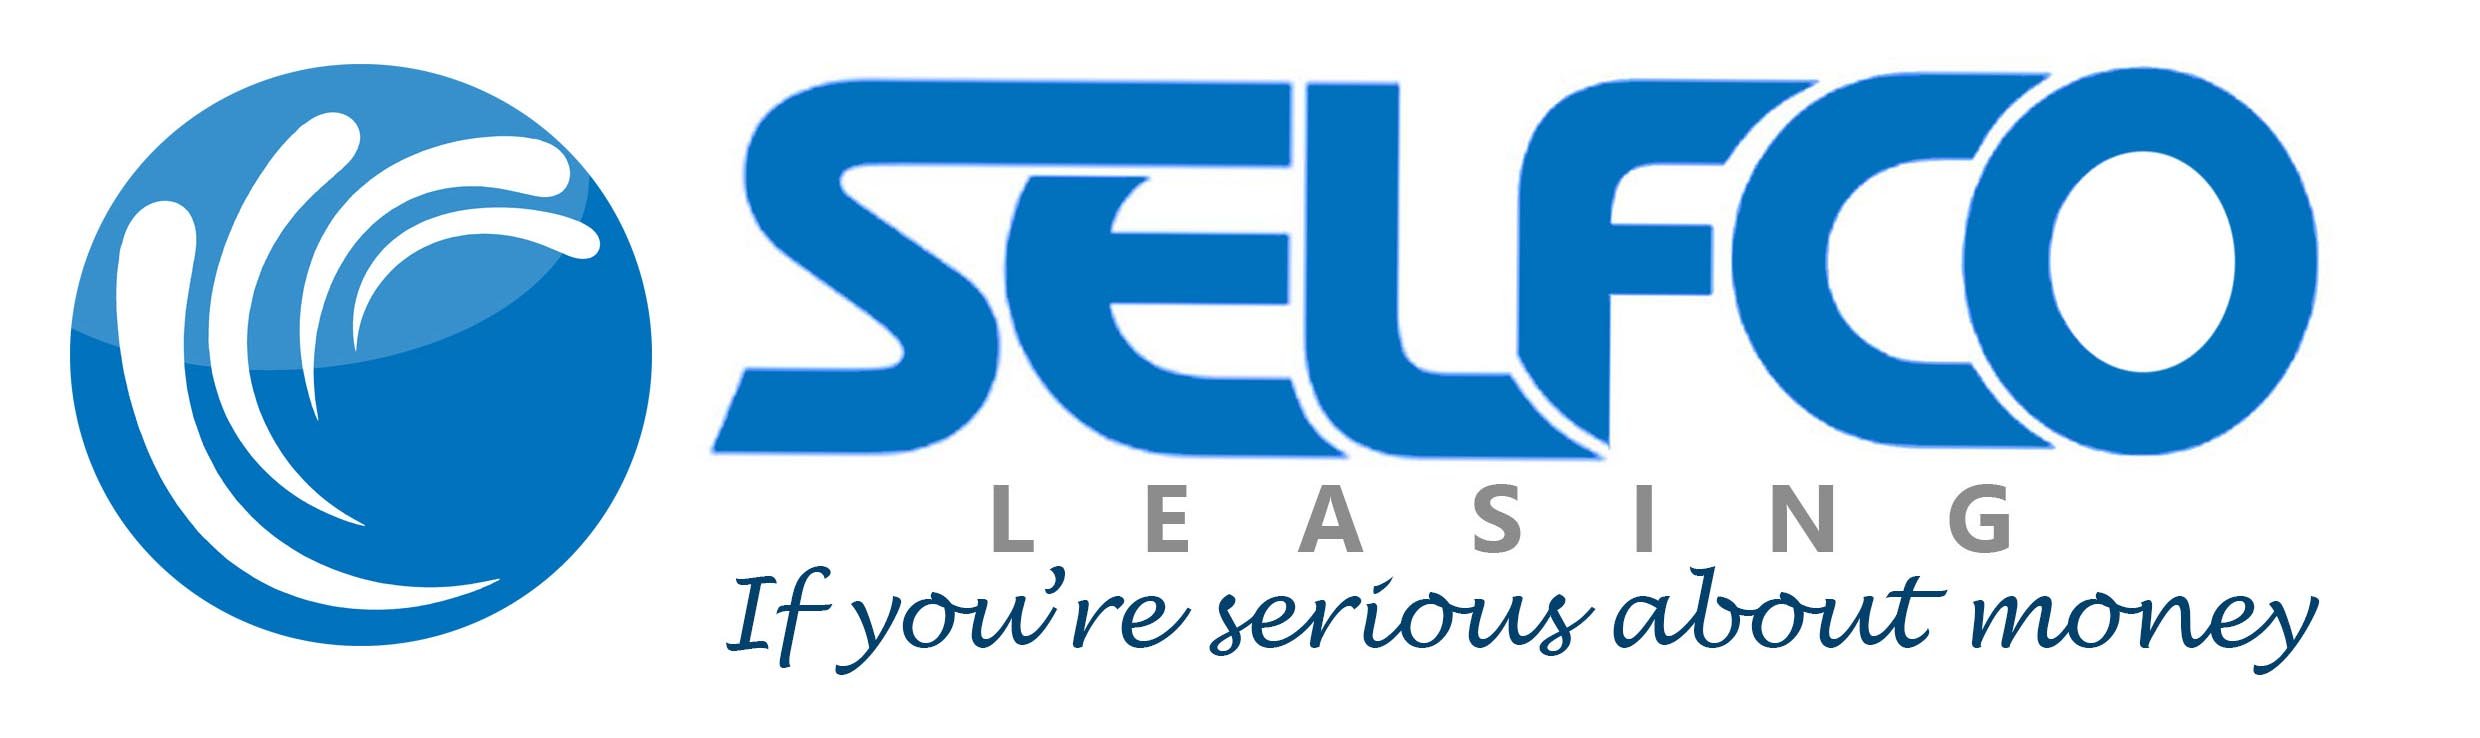 Selfco-Leasing